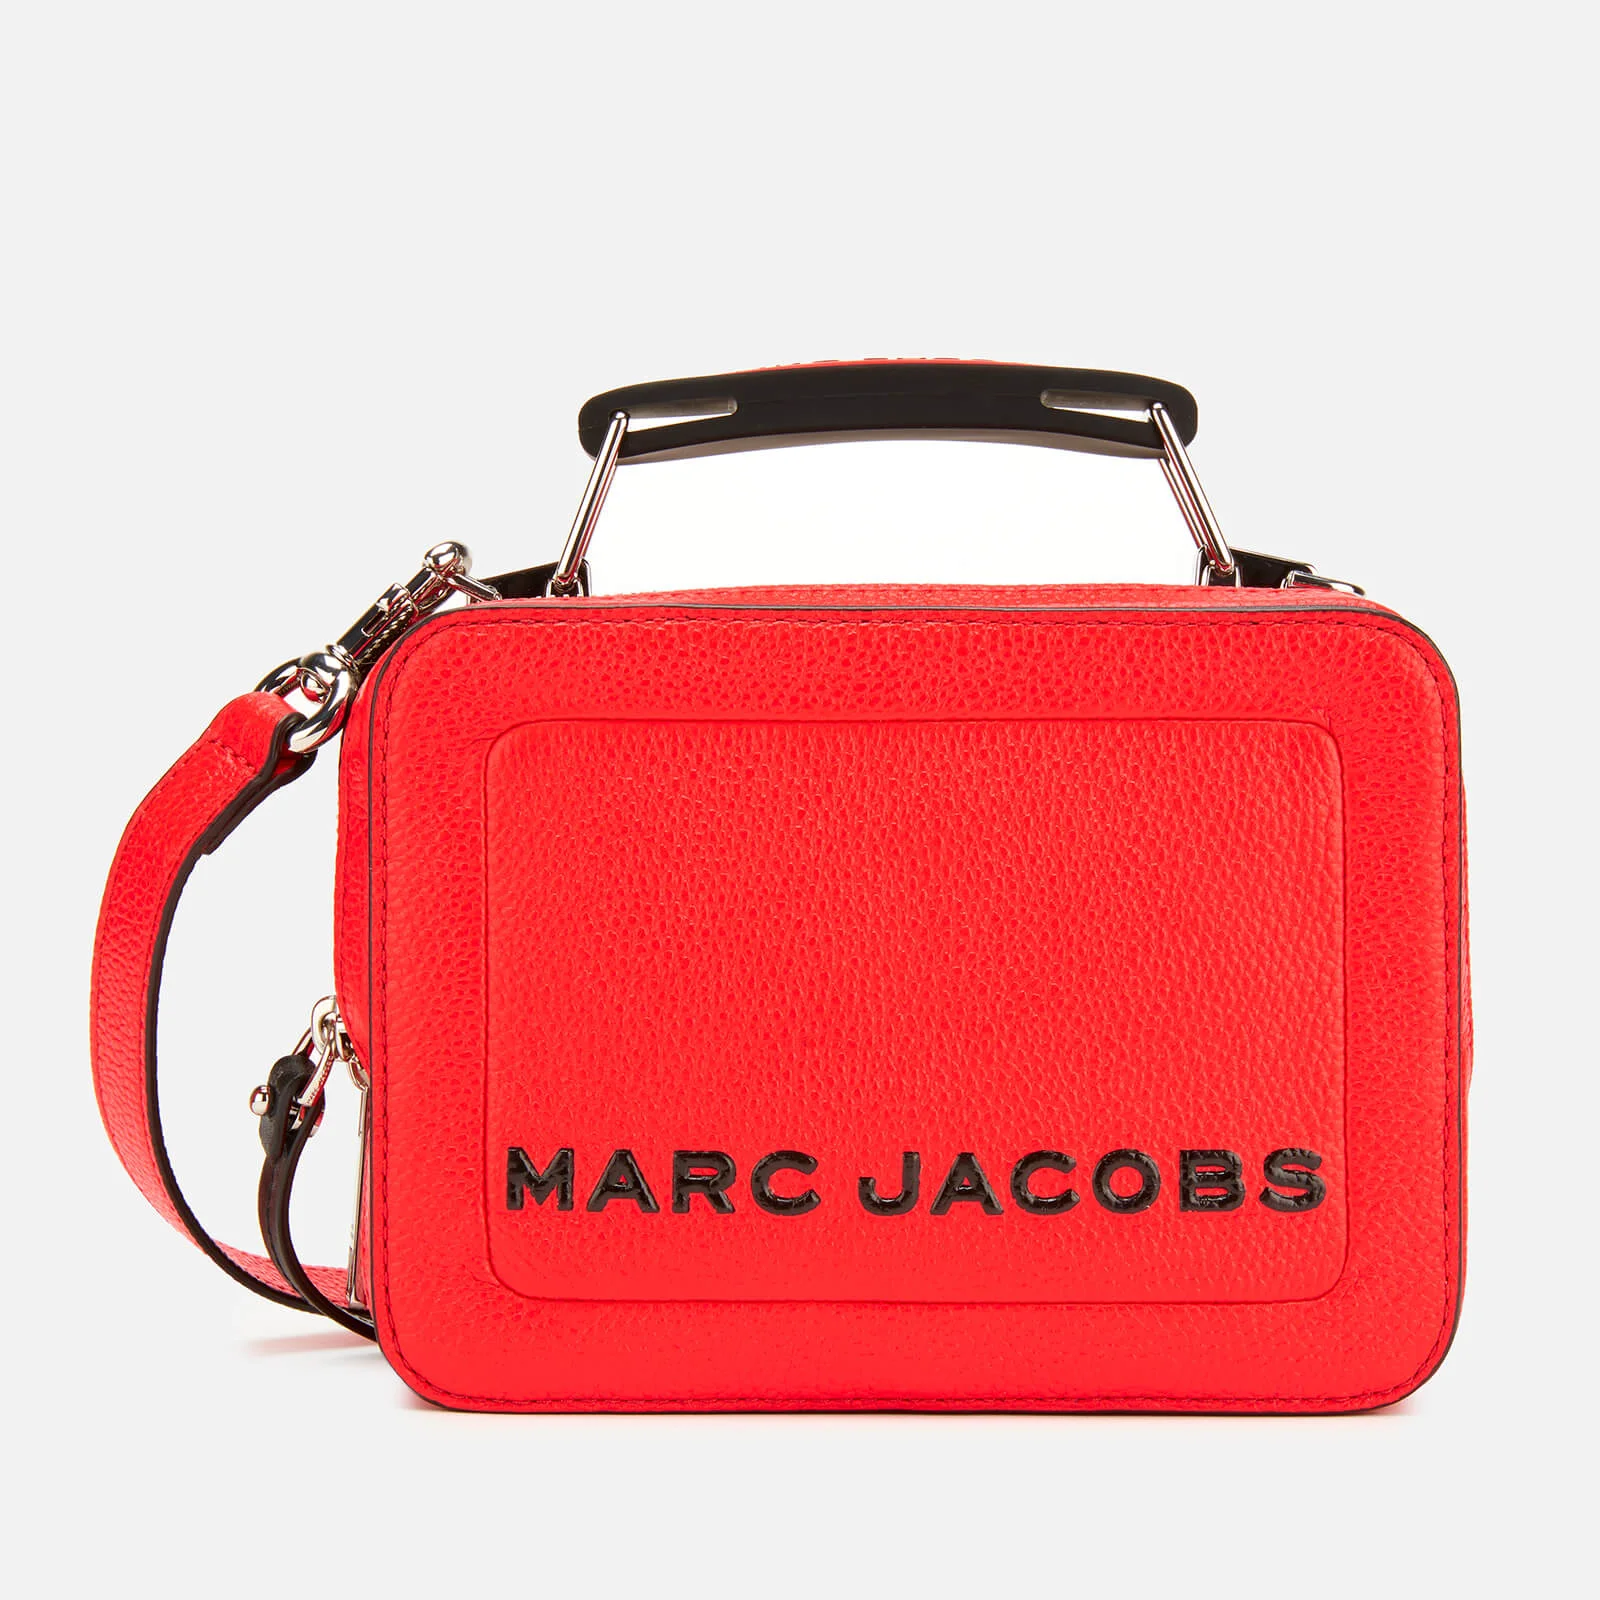 Marc Jacobs Women's The Box 20 Cross Body Bag - Geranium Image 1